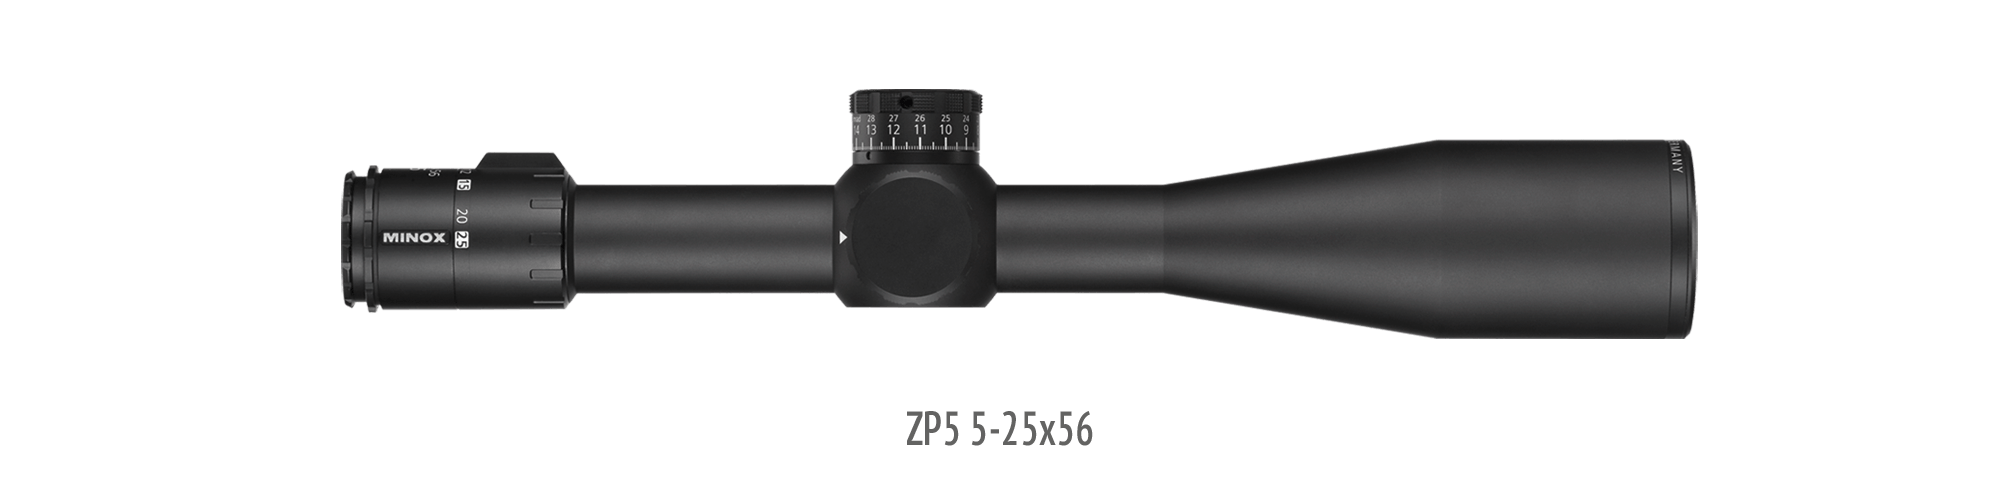 MINOX Riflescopes PRO ZP5 5-25x56